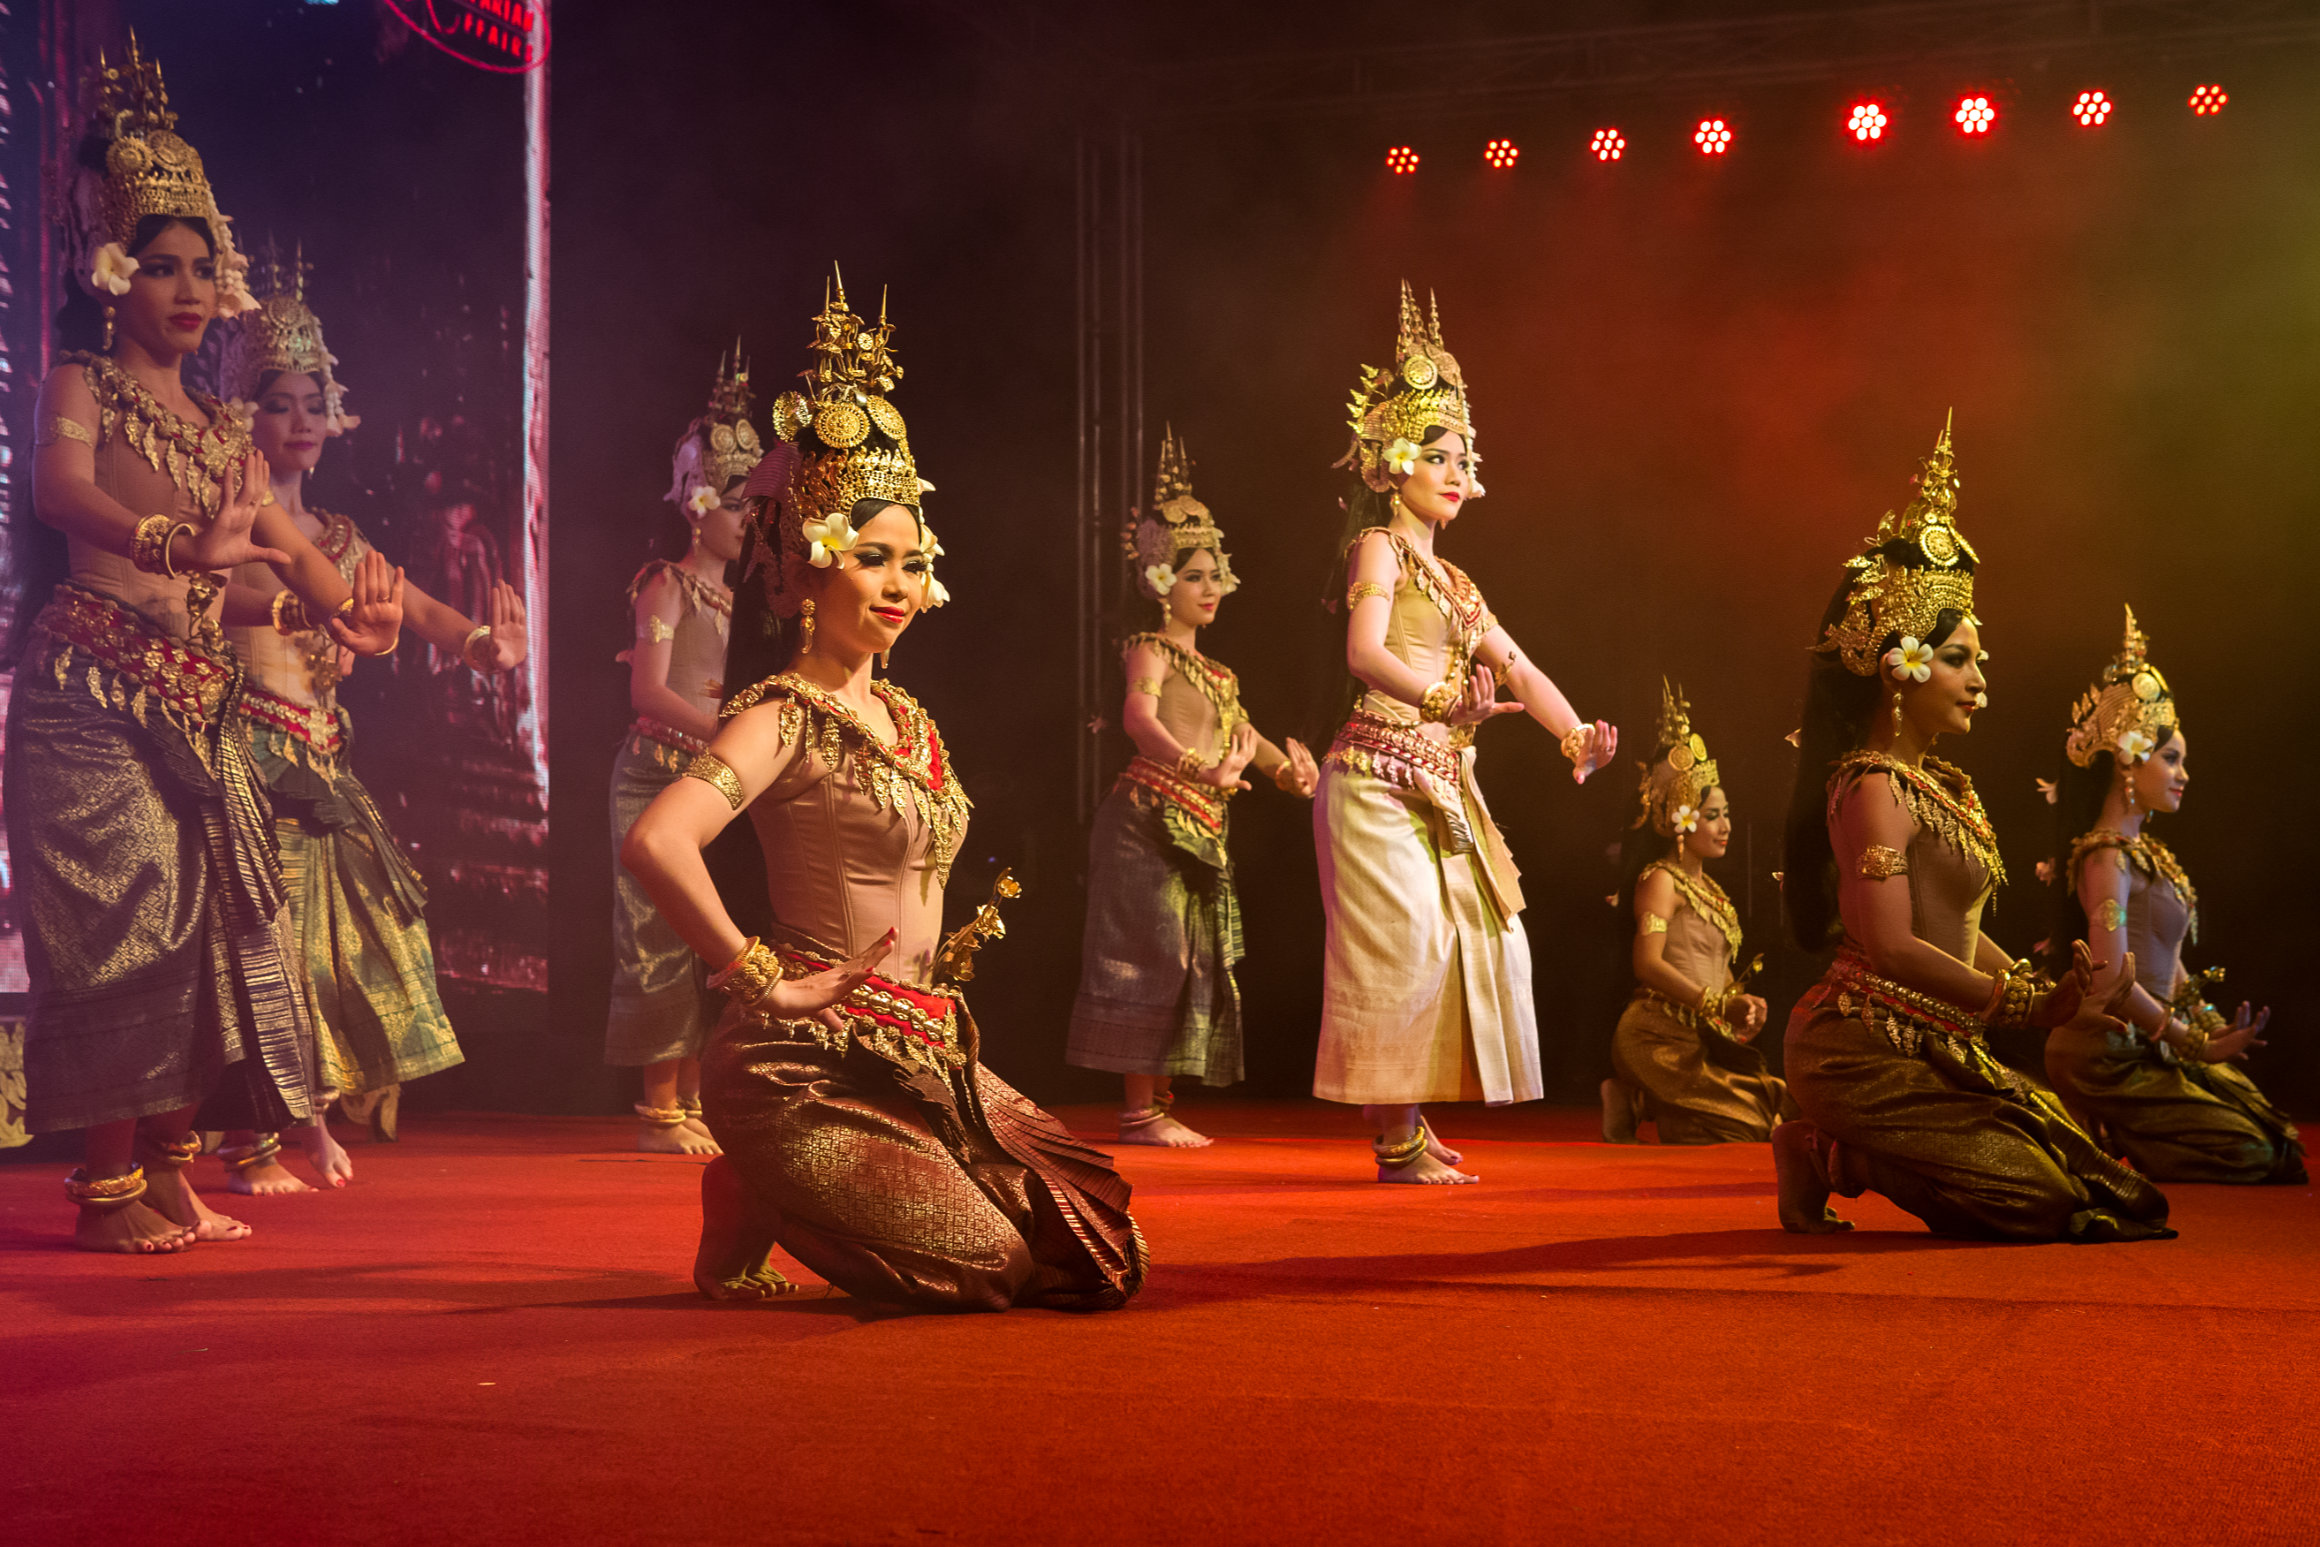 Apsara dancers at an event in Cambodia